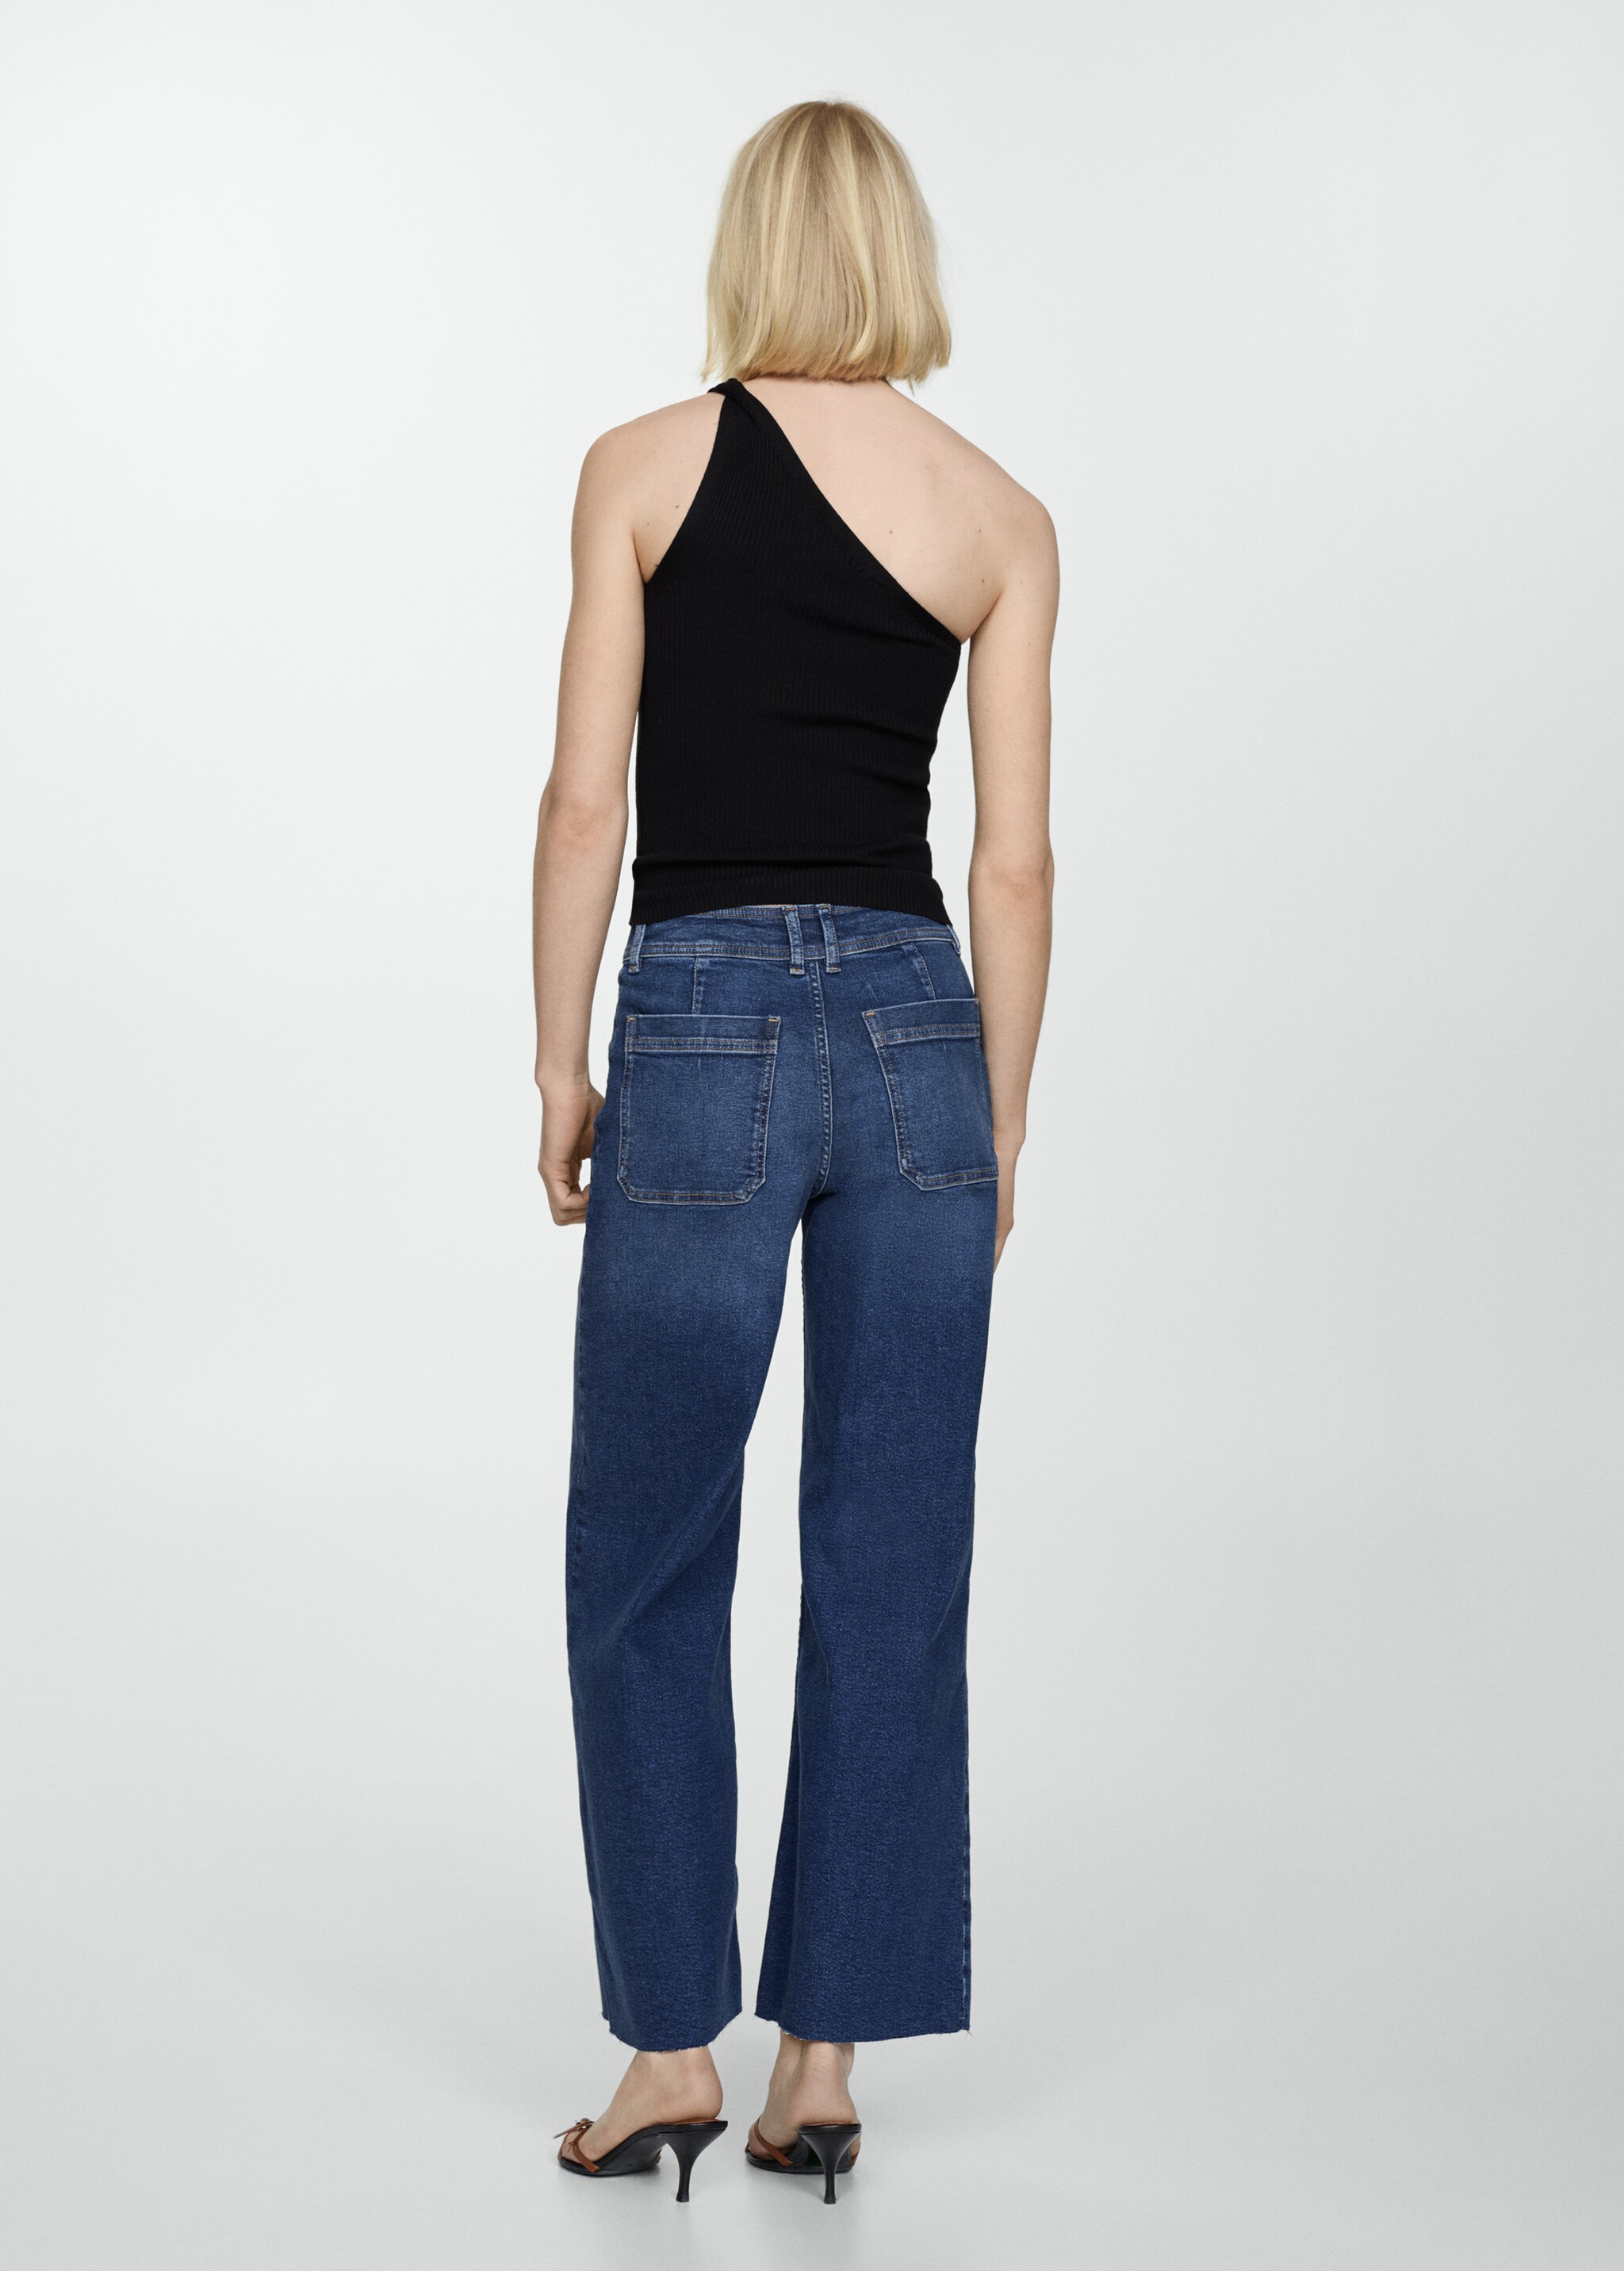 Jean style jupe-culotte Catherin taille haute - Verso de l’article